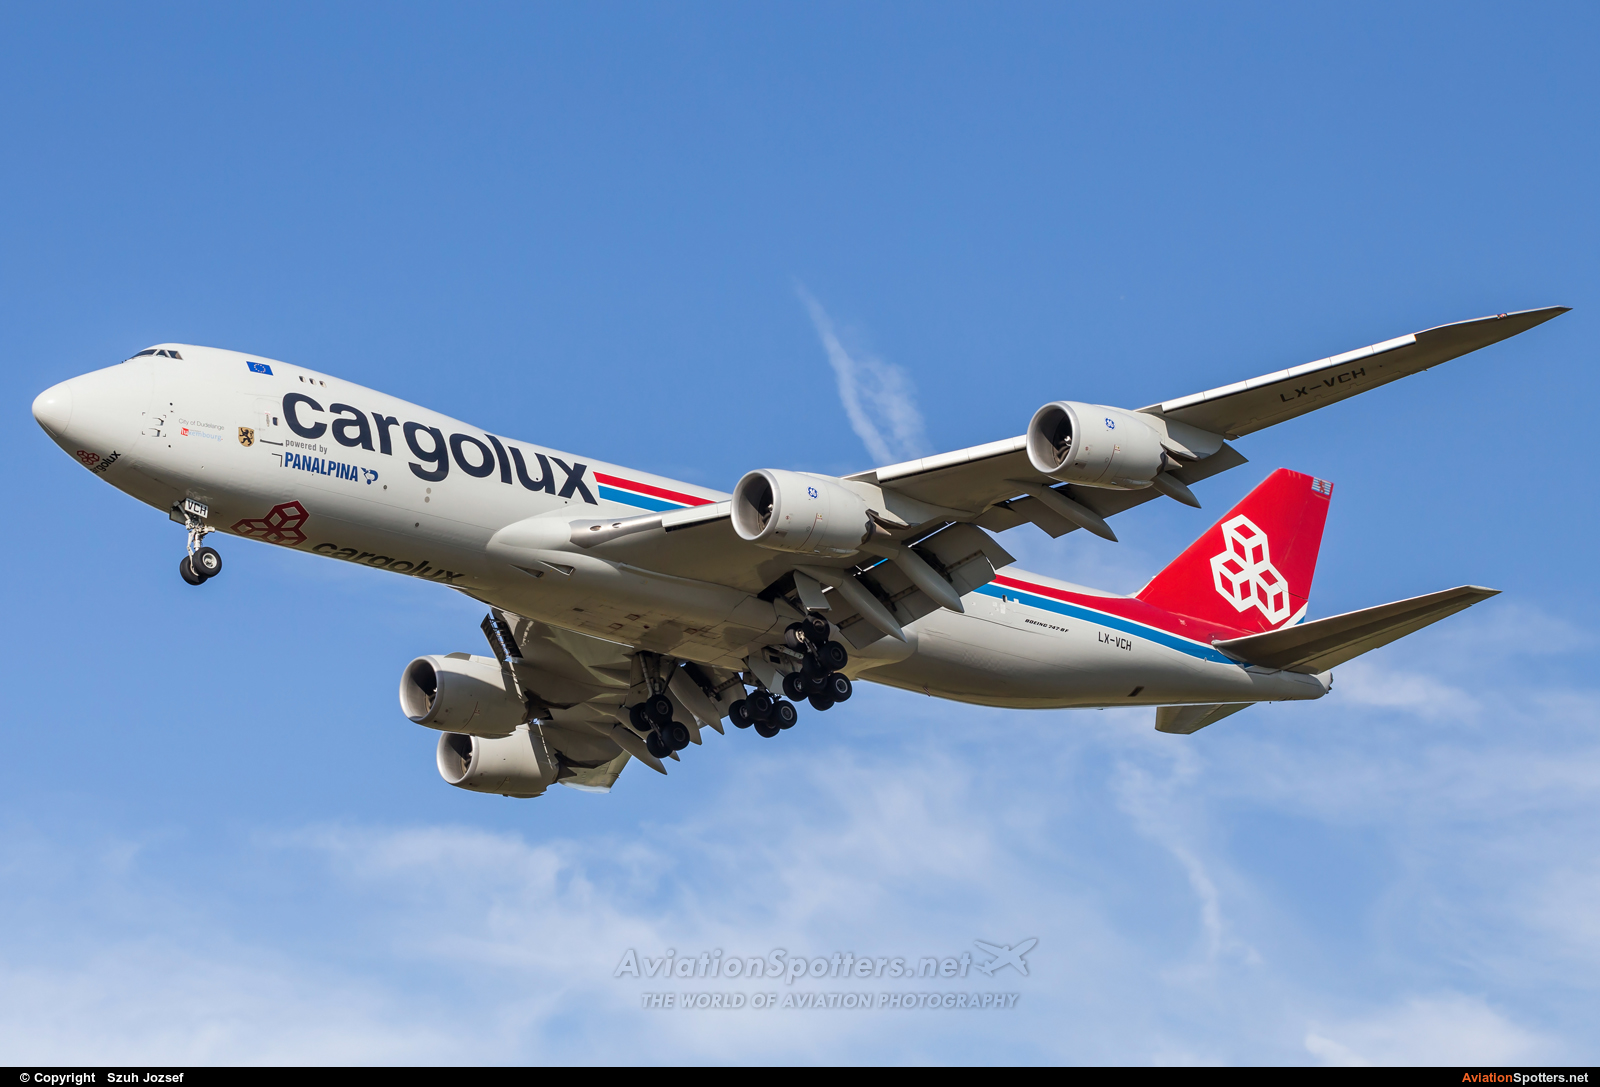 Cargolux  -  747-8F  (LX-VCH) By Szuh Jozsef (szuh jozsef)